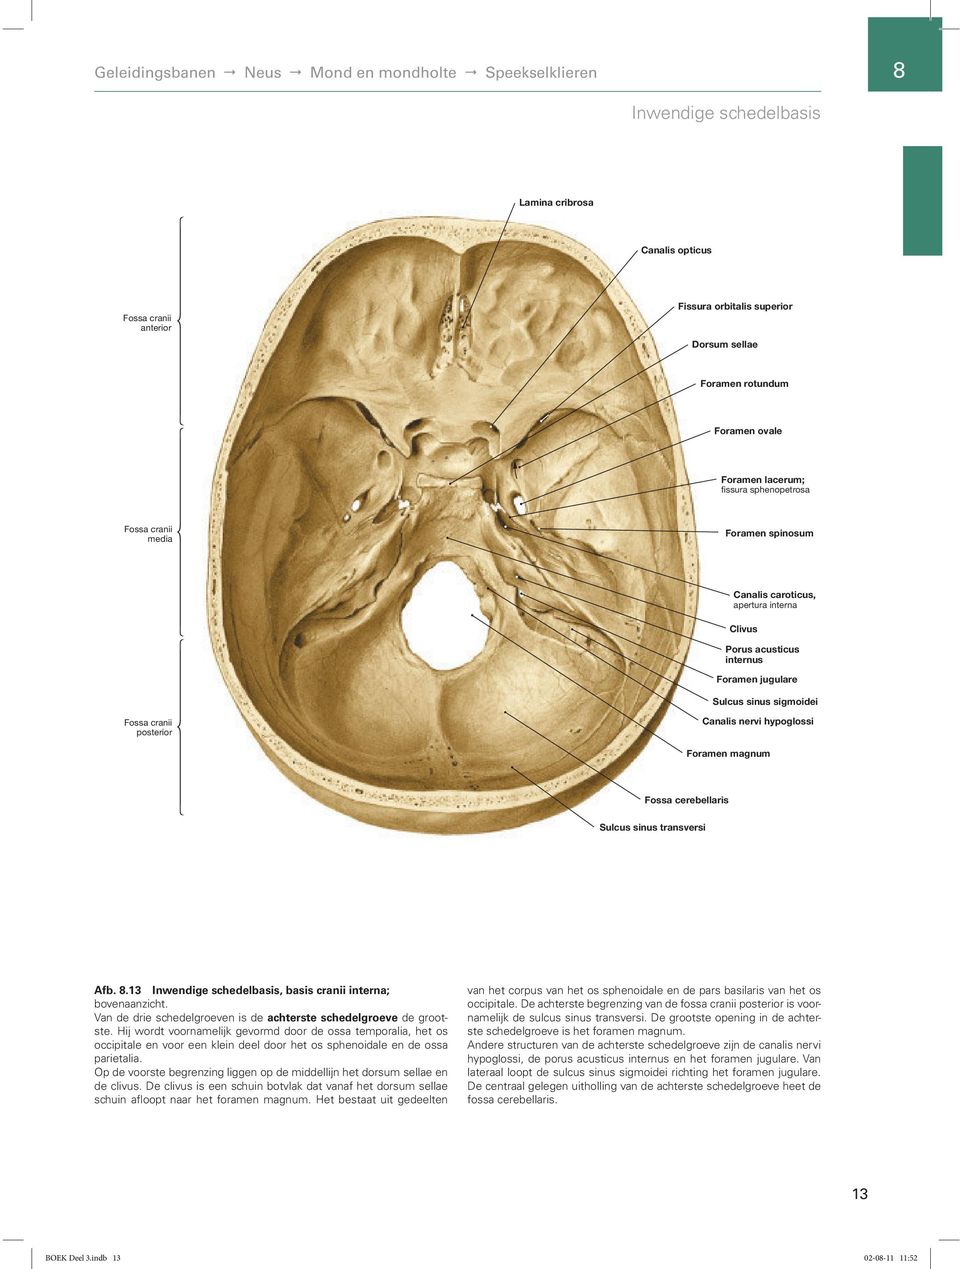 sigmoidei Fossa cranii posterior Canalis nervi hypoglossi Foramen magnum Fossa cerebellaris Sulcus sinus transversi Afb. 8.13 Inwendige schedelbasis, basis cranii interna; bovenaanzicht.